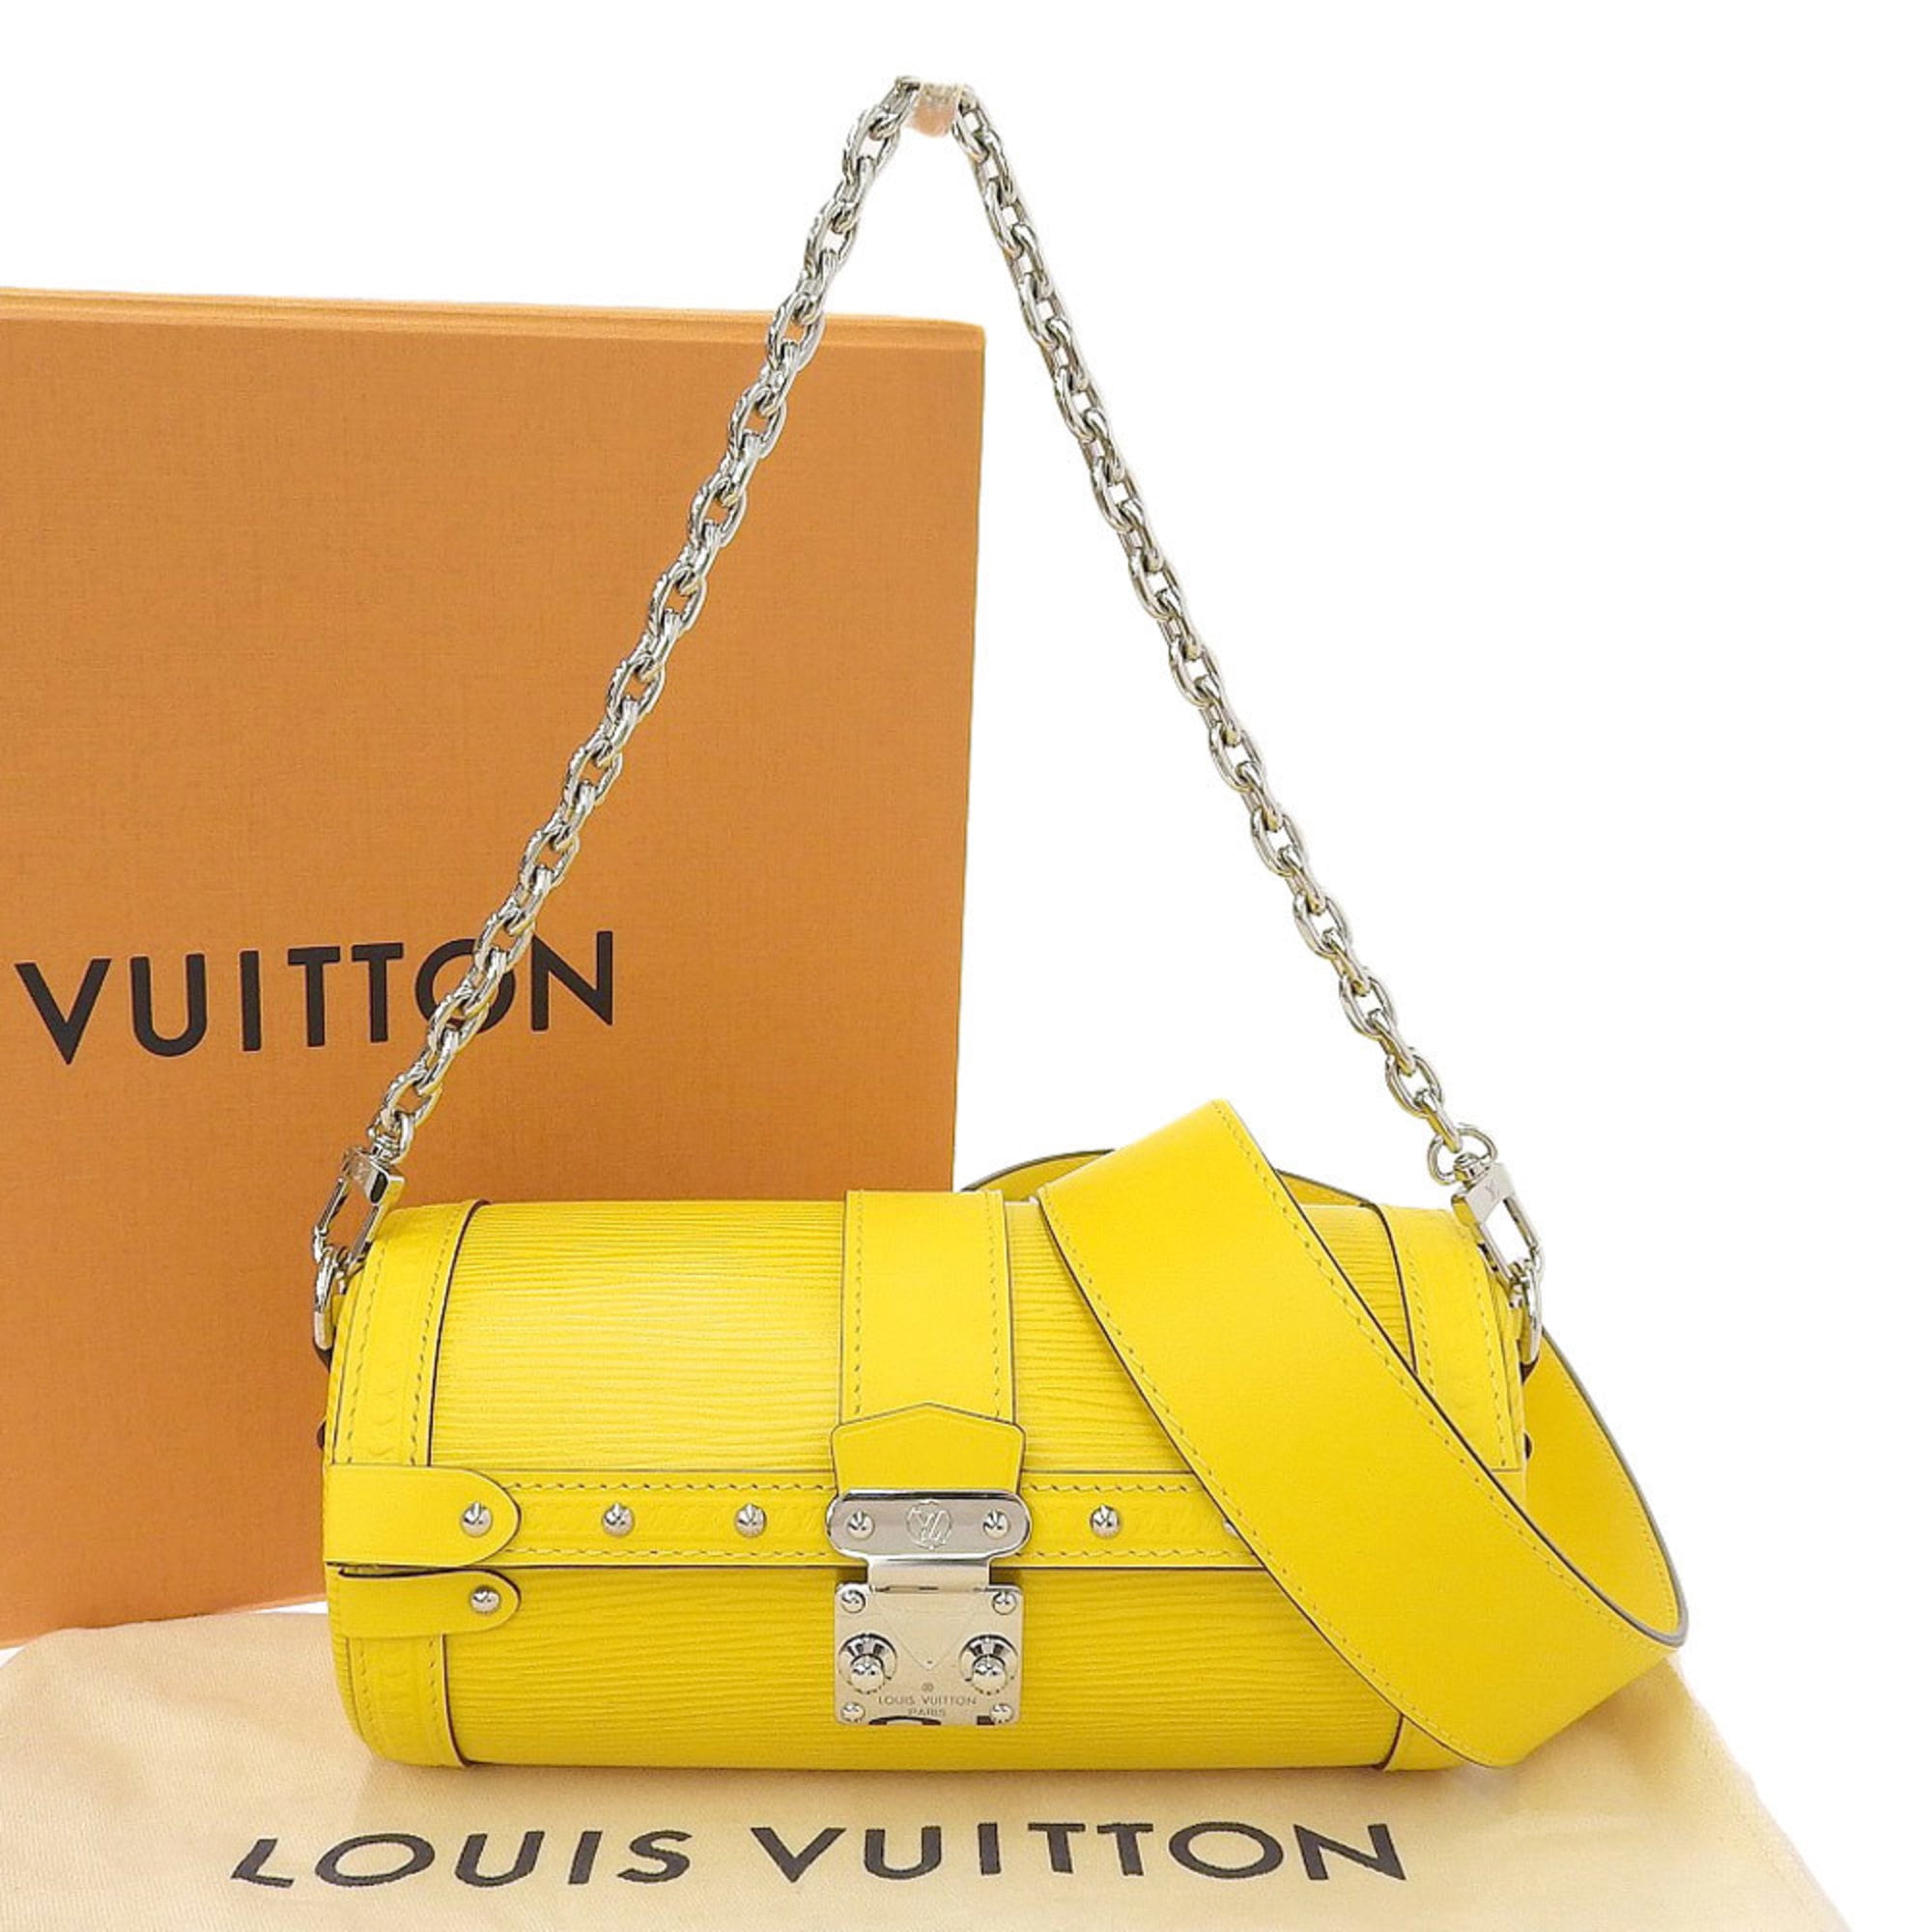 Louis Vuitton metis holiday box and shopping bag